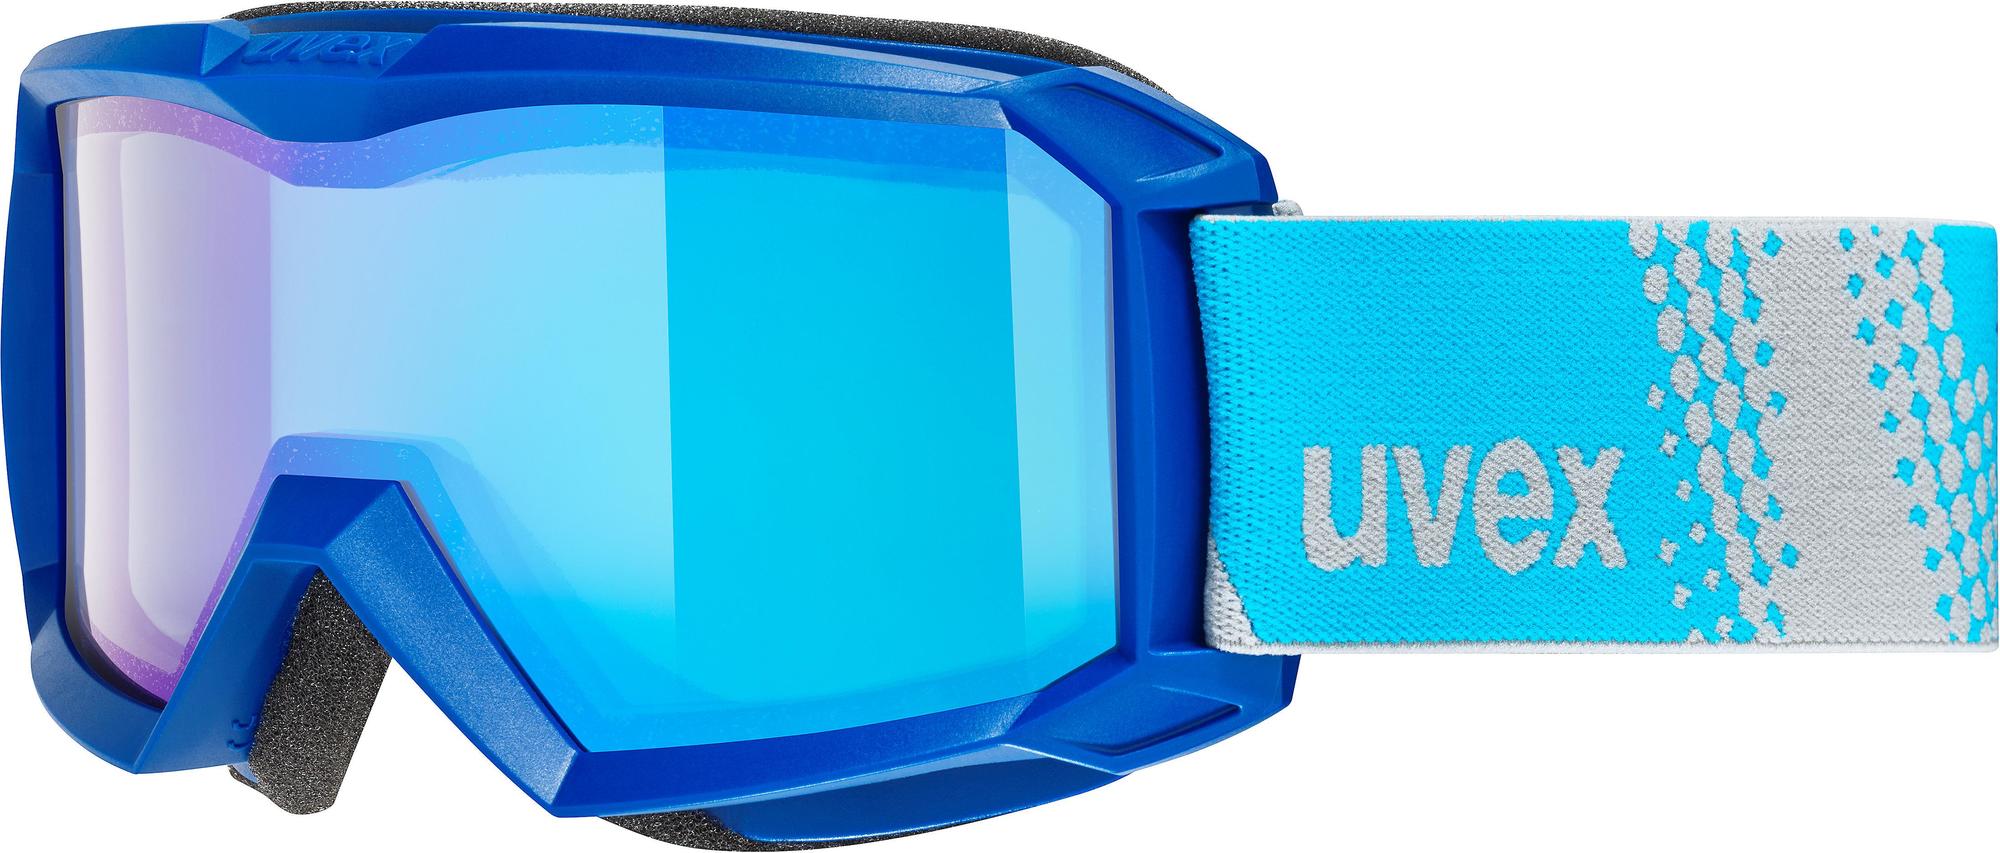 Uvex Flizz FM blue - mirror blue s1 (40)